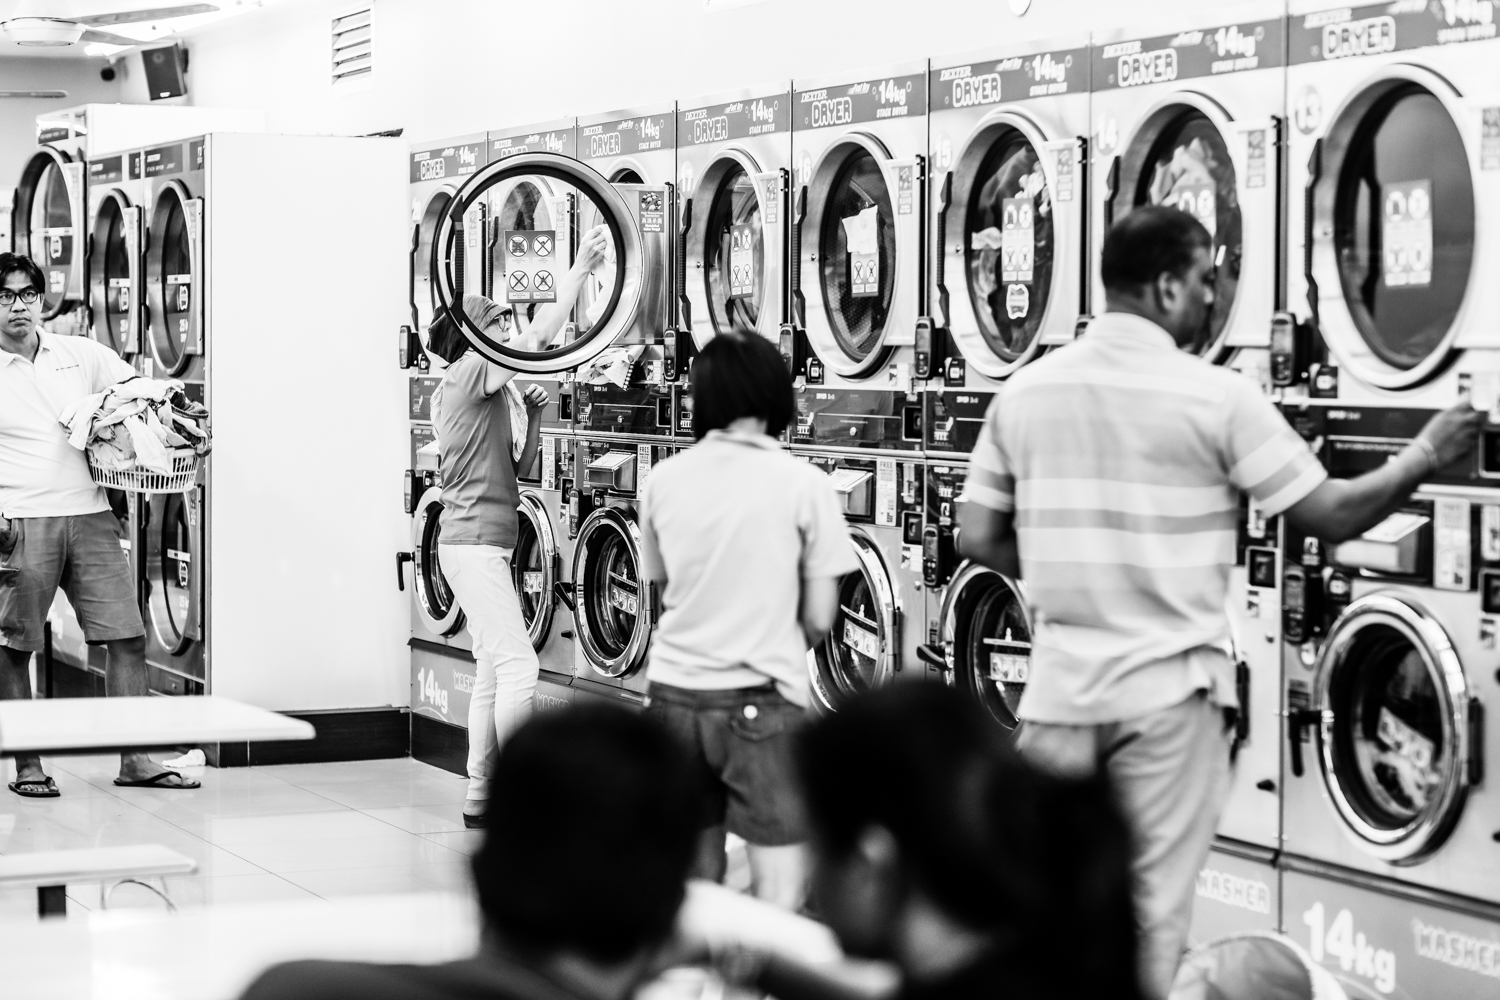 Washing day at a self service 24 hour laundromat in Taman Tun Dr. Ismail township in Kuala Lumpur, Malaysia